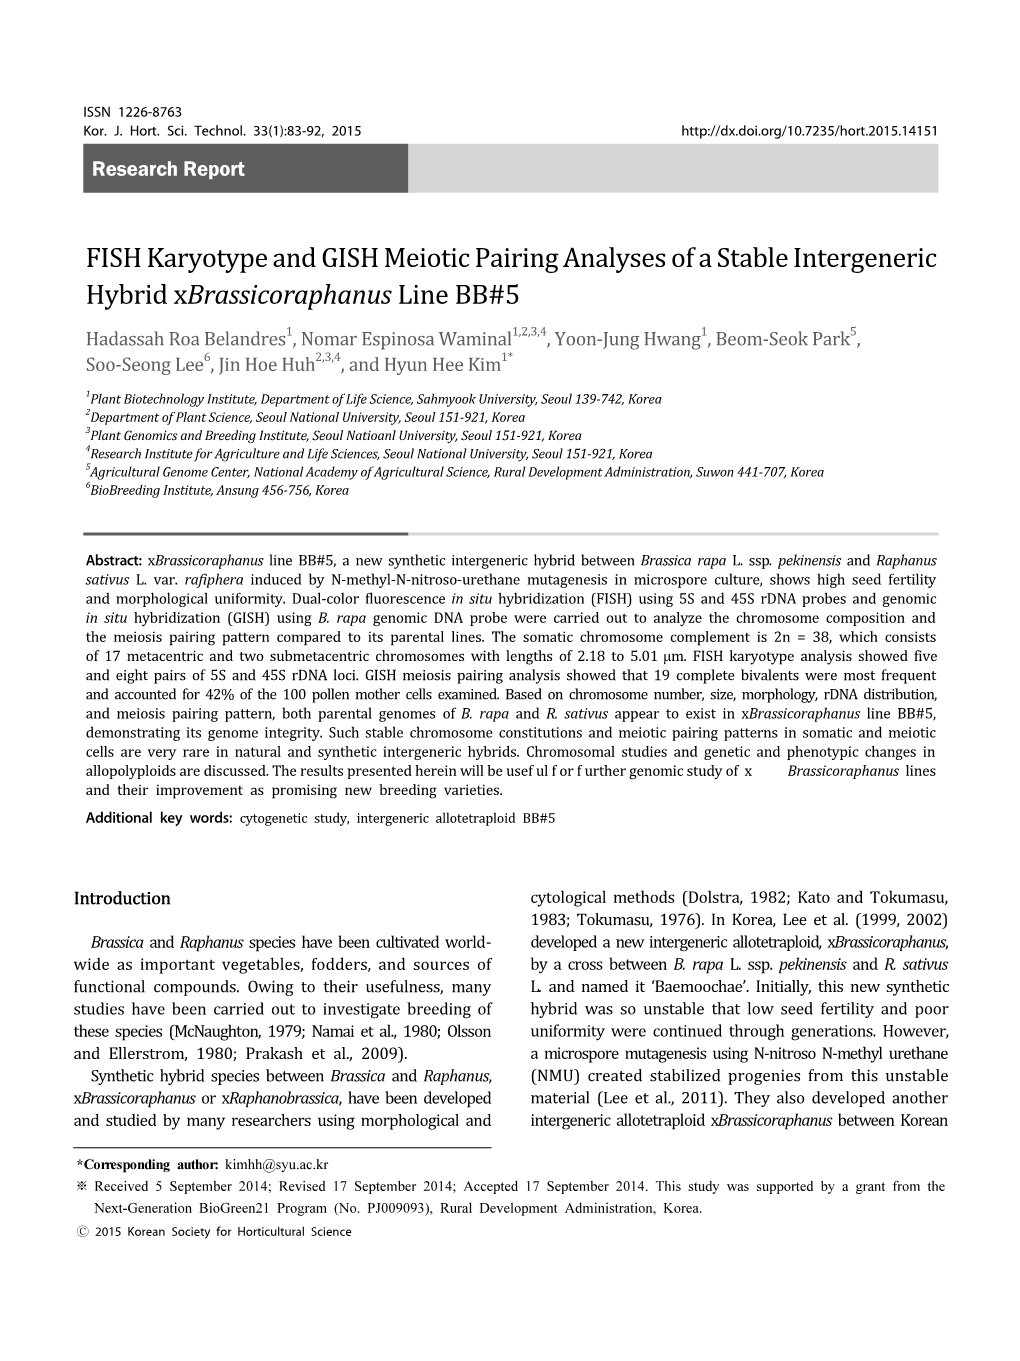 FISH Karyotype and GISH Meiotic Pairing Analyses of a Stable Intergeneric Hybrid Xbrassicoraphanus Line BB#5